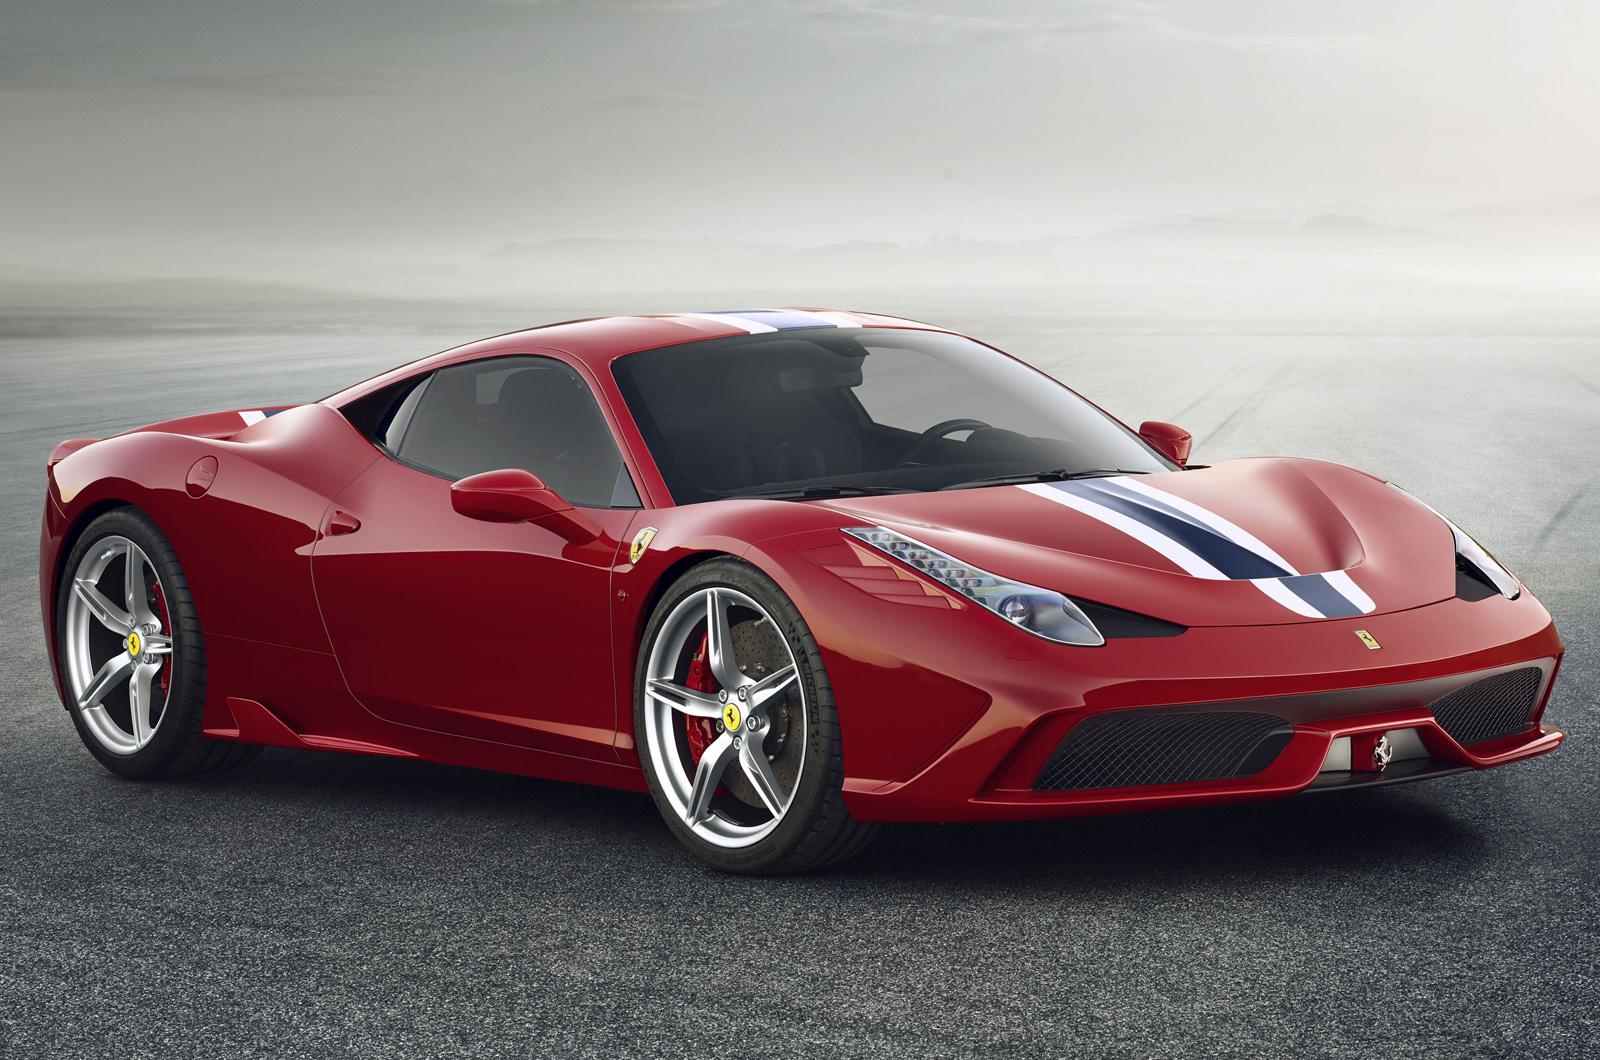 Ferrari 458 Speciale: Σε νέες -ατμό-σφαιρες